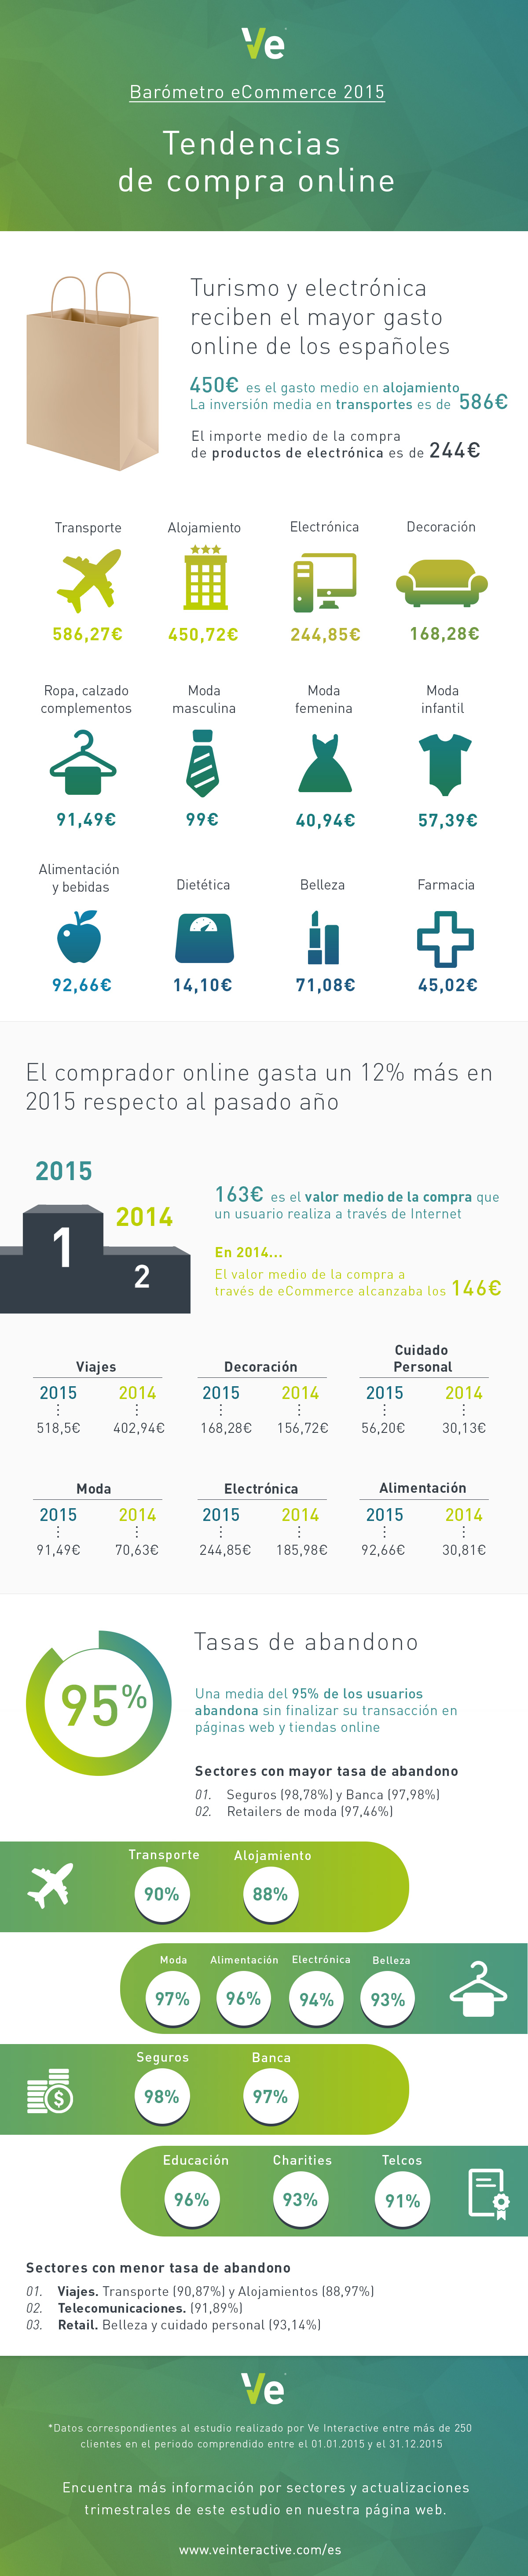 consumo-ecommerce-2015